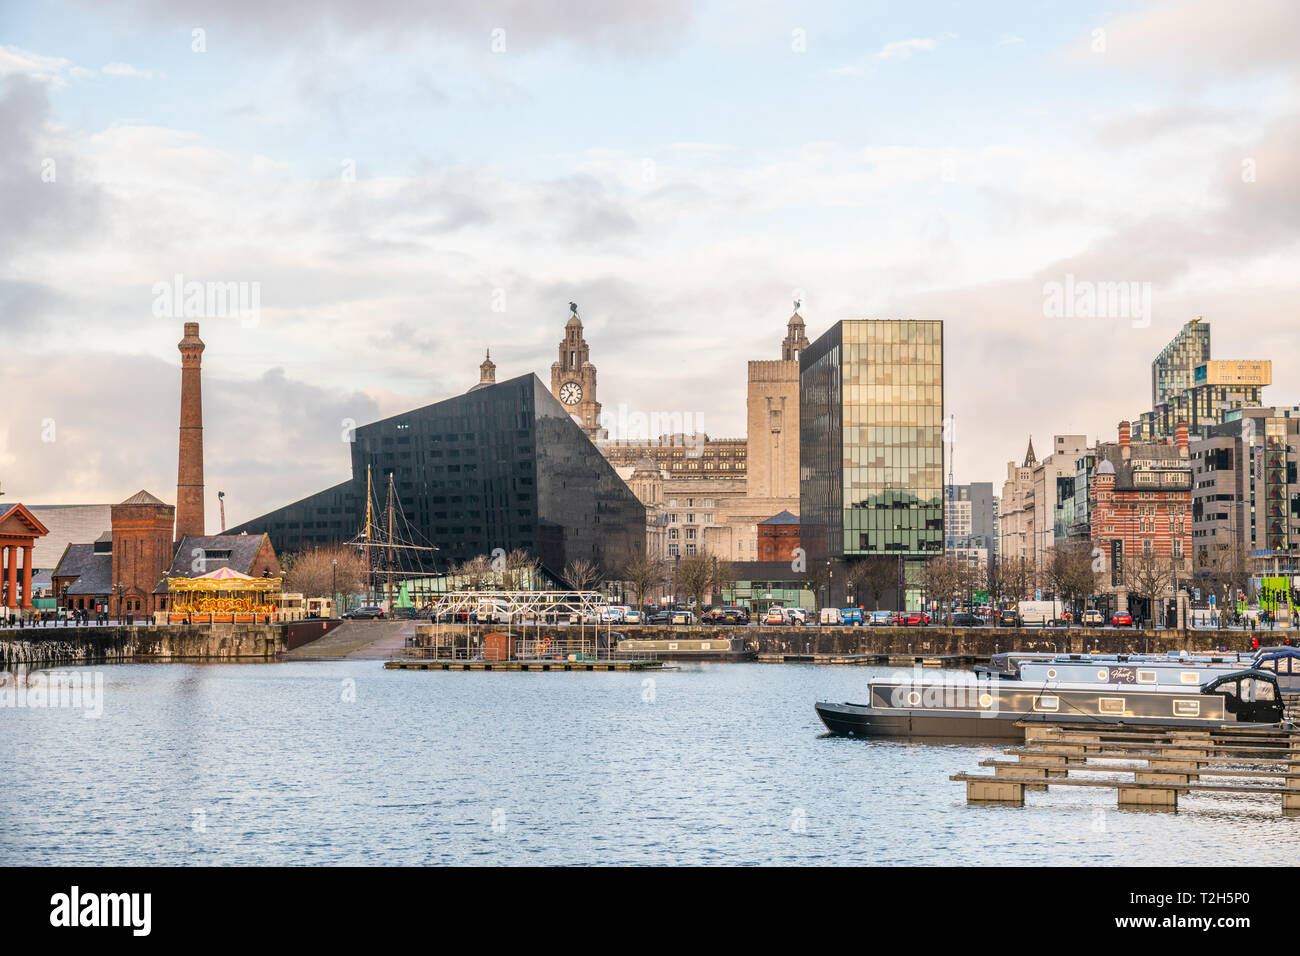 Royal Albert Dock in Liverpool, England, Europe Stock Photo